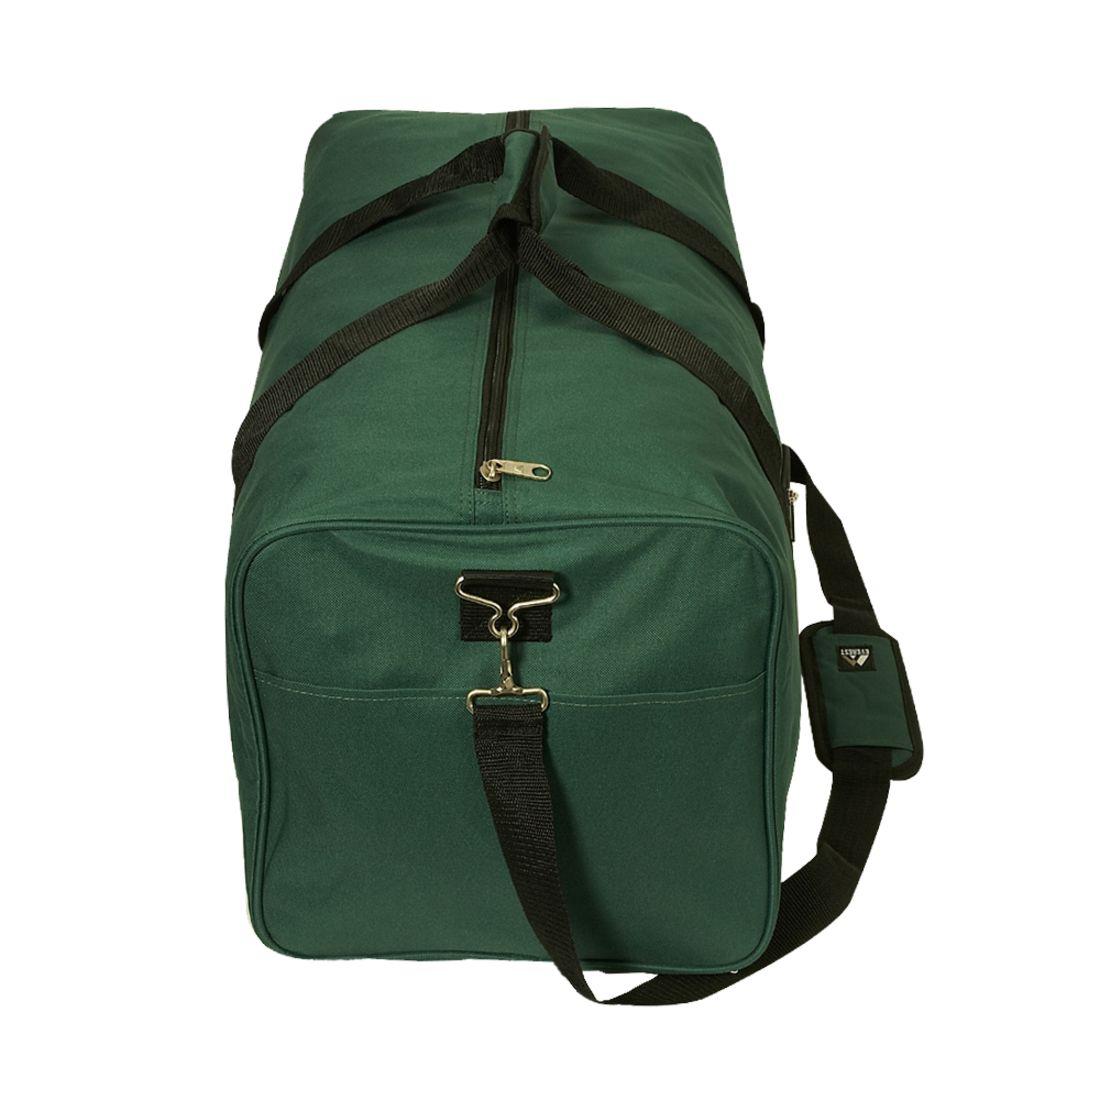 Everest Basic Utilitarian Medium Gear Duffle Bag